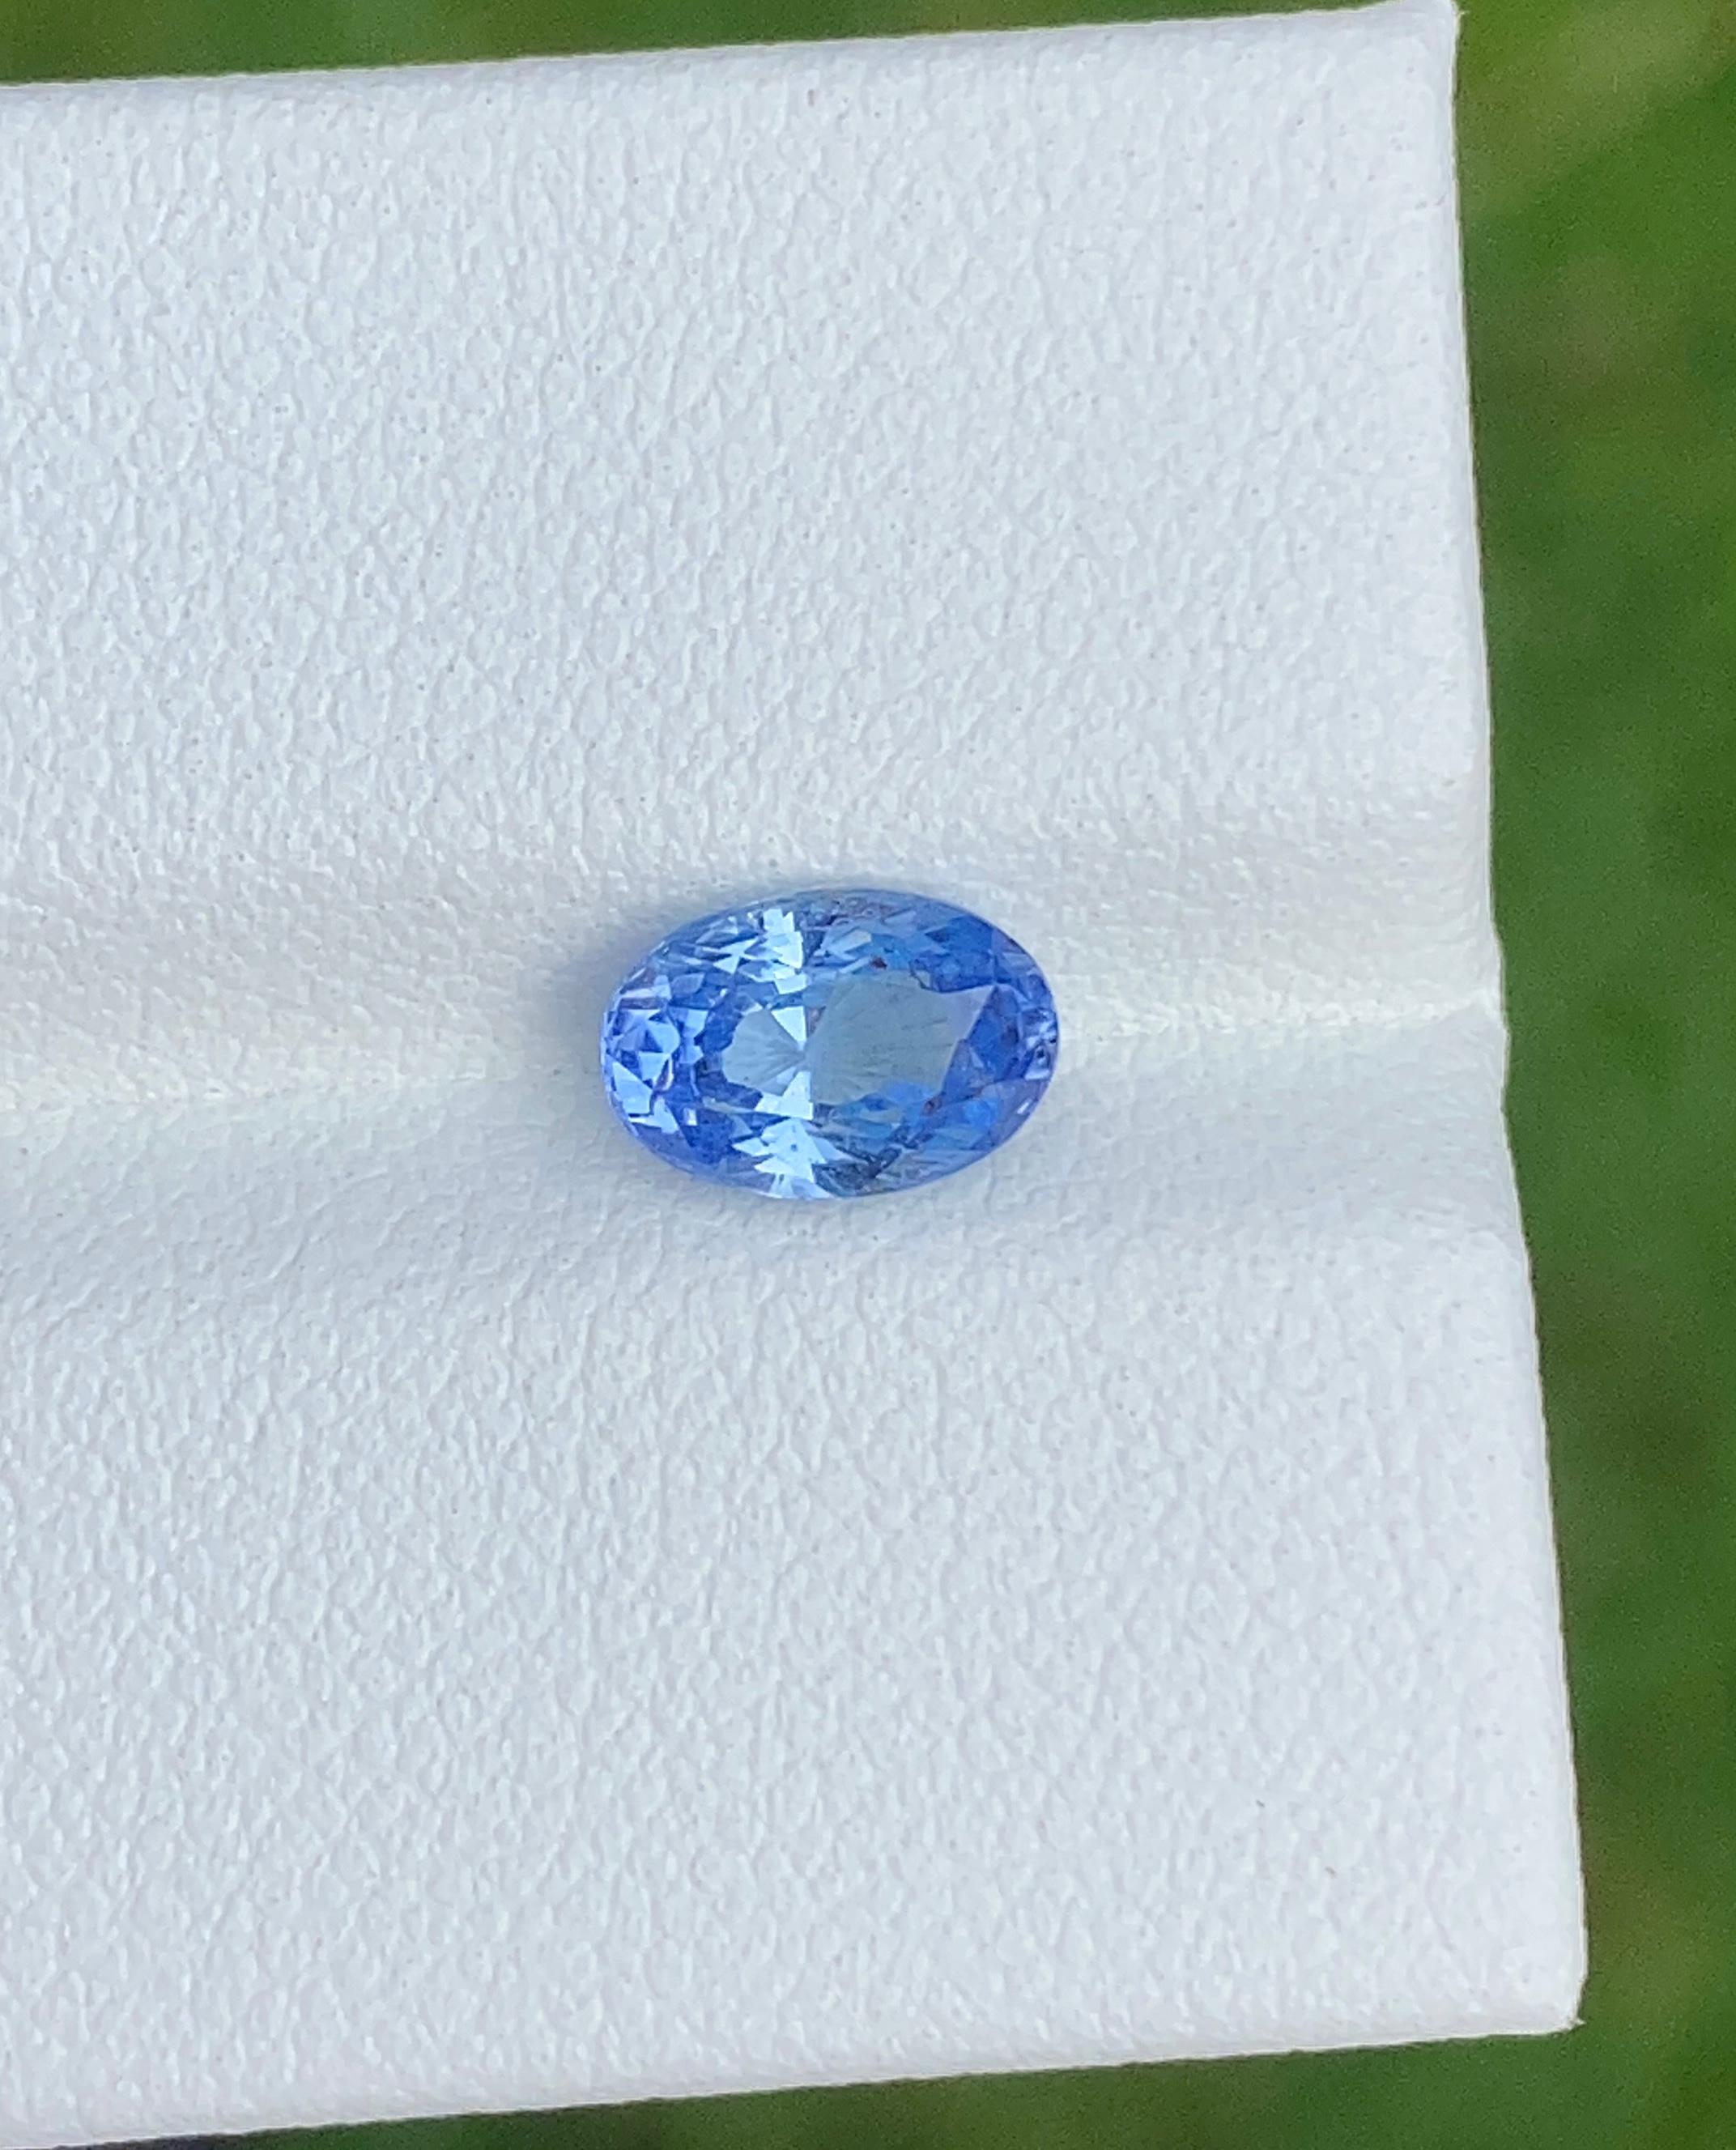 Oval Cut Certified Unheated Blue Sapphire Ring Gem 1.25 Carat Oval Gemstone Ceylon Origin For Sale